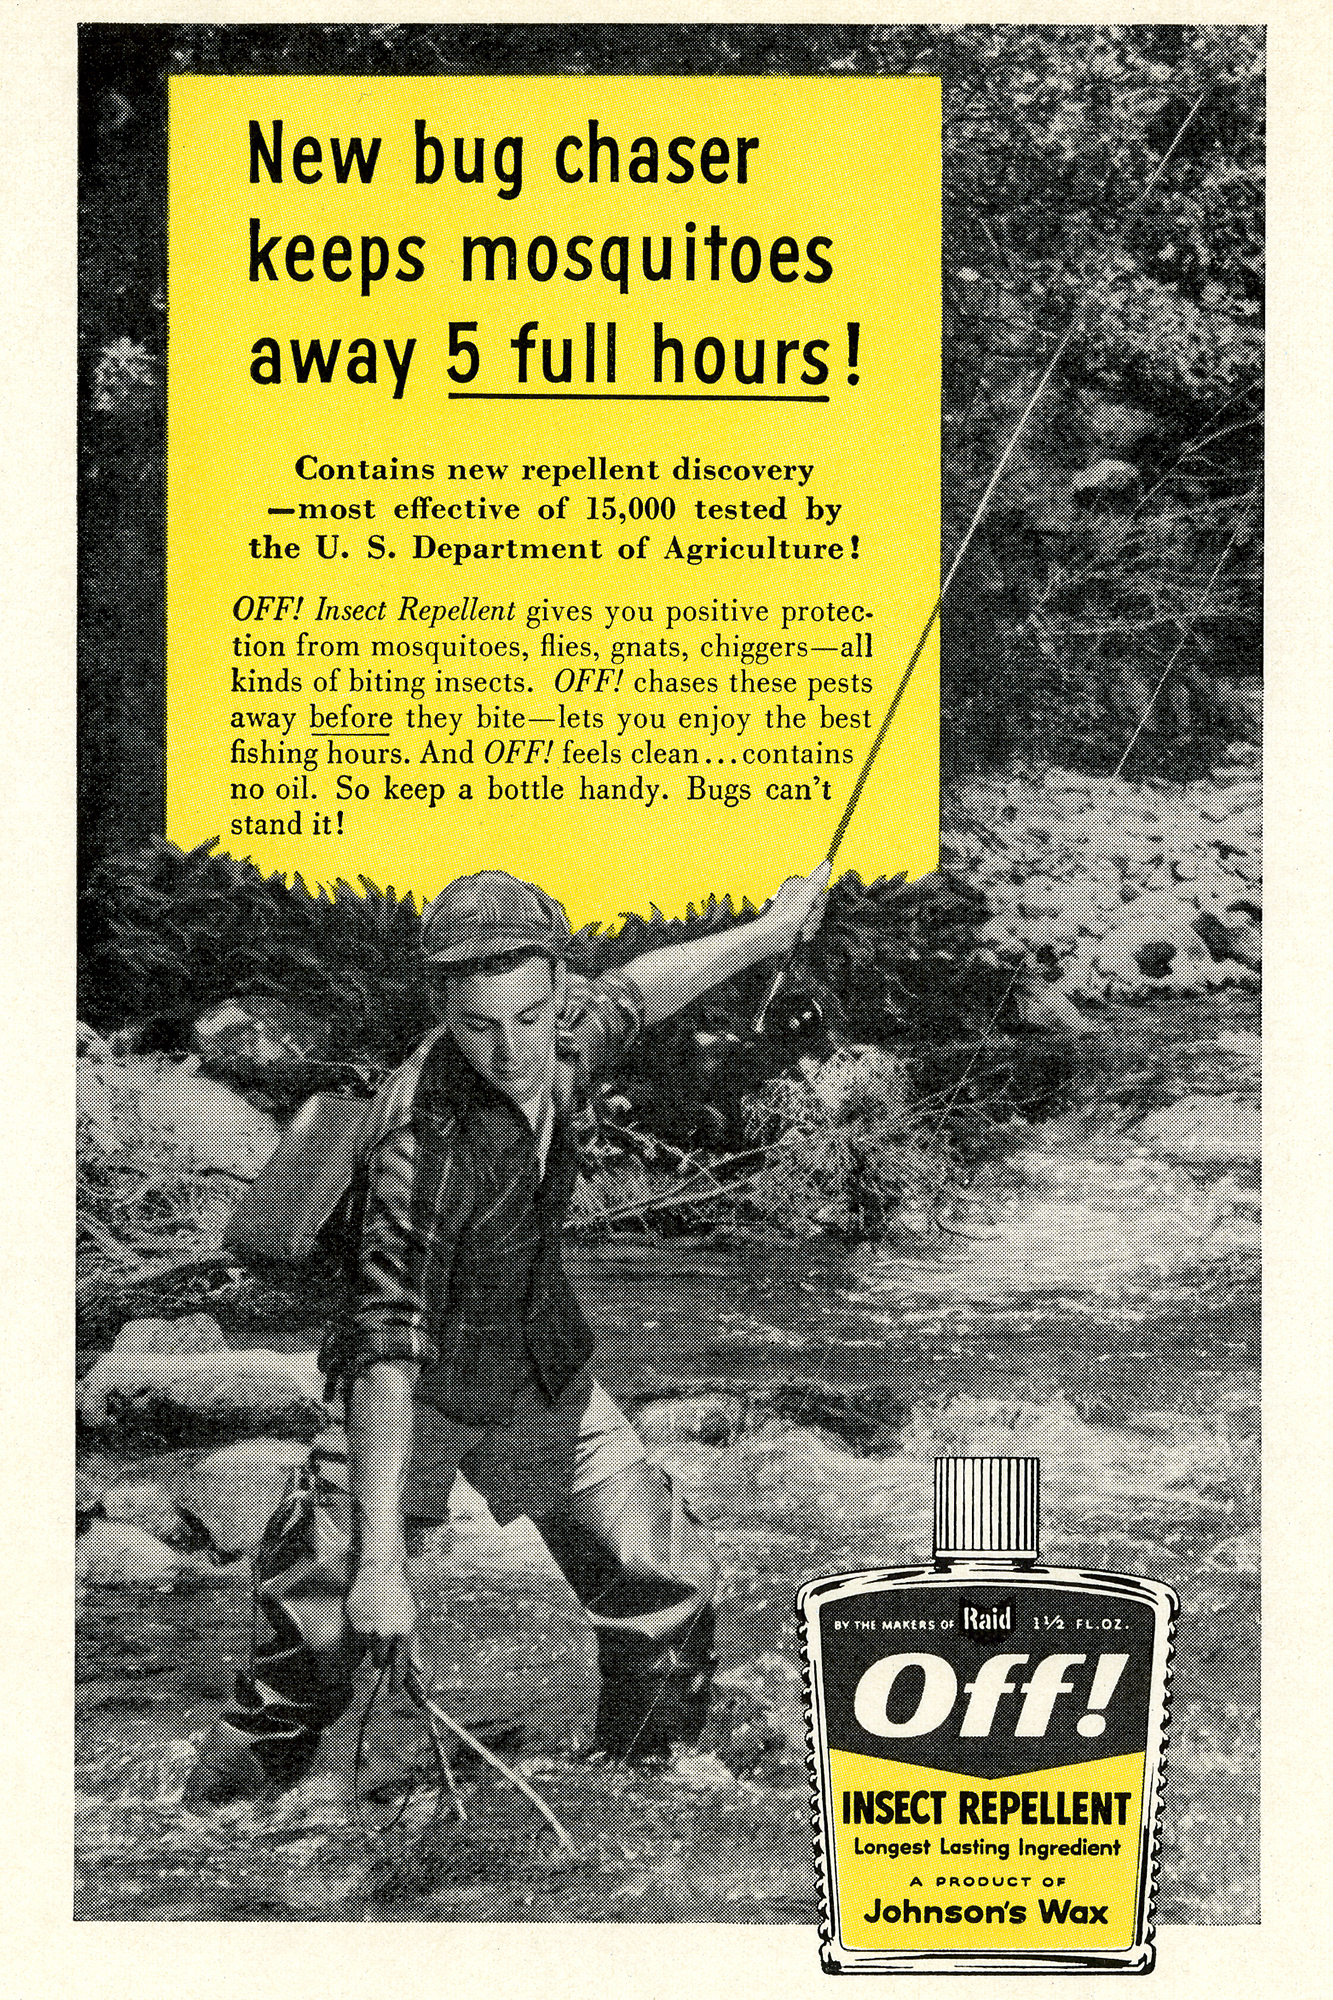 Johnson’s Wax 1957 vintage ad for OFF! bug spray